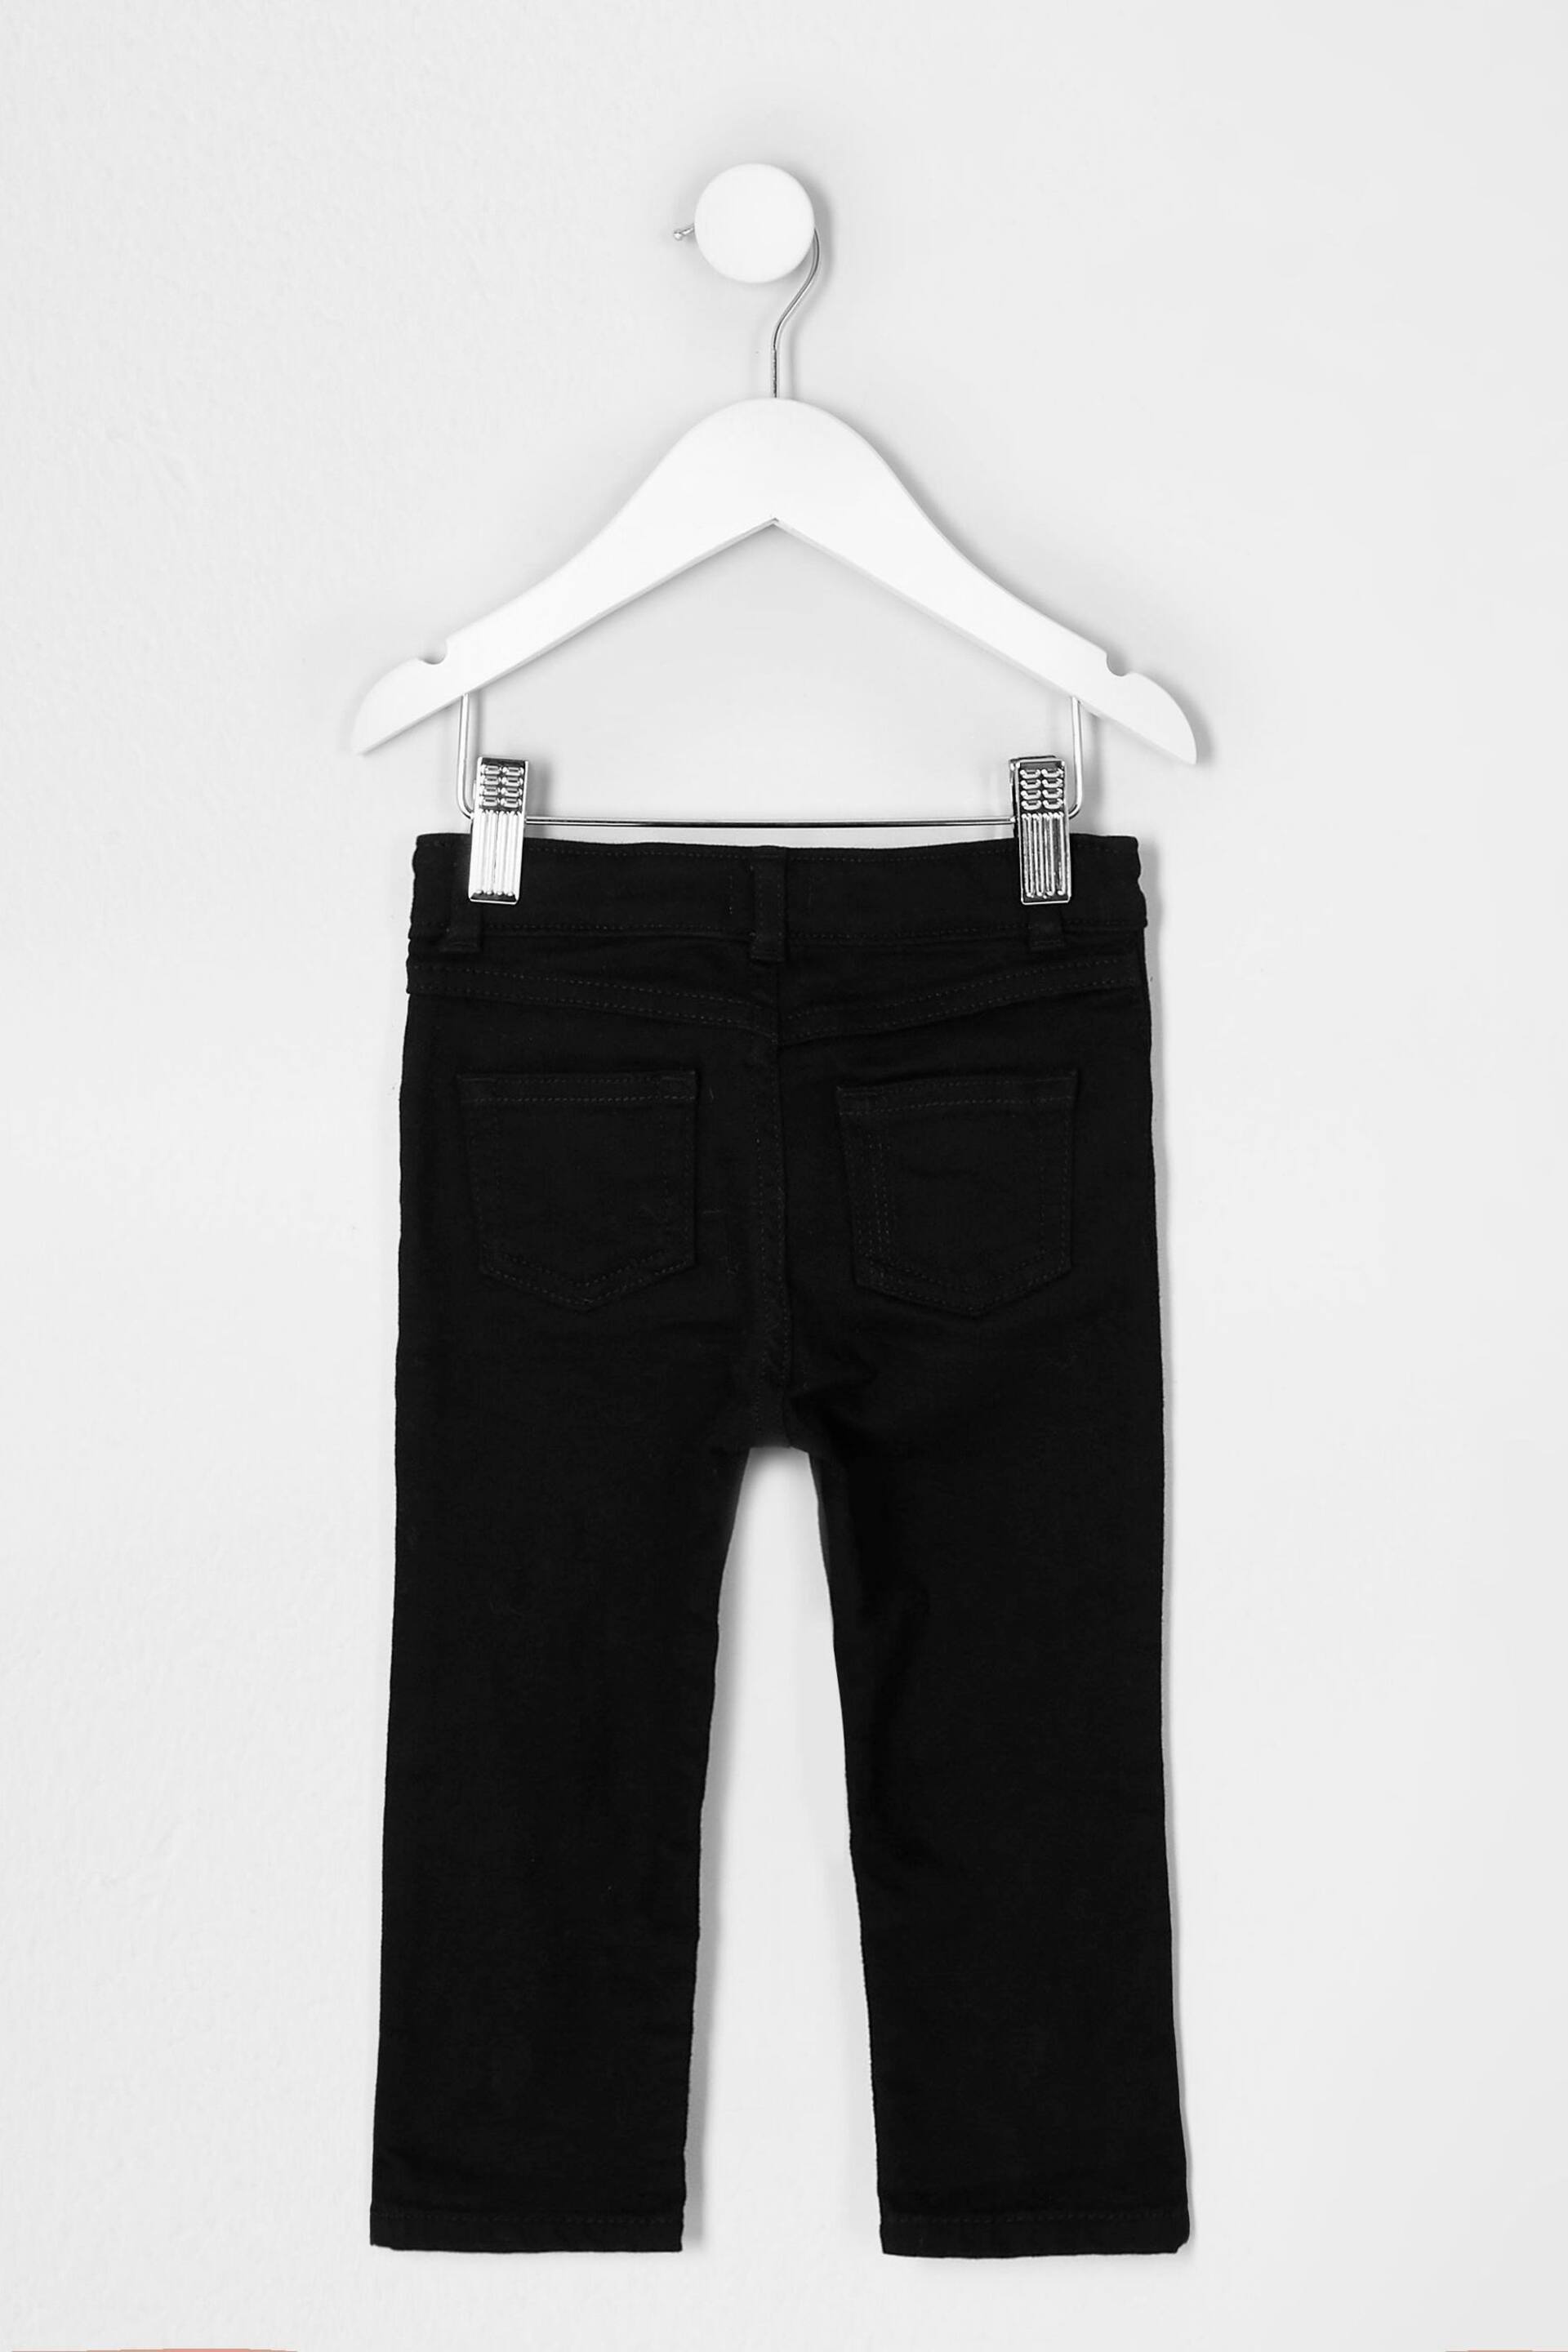 River Island Black Chrome Boys Skinny Jeans - Image 2 of 3